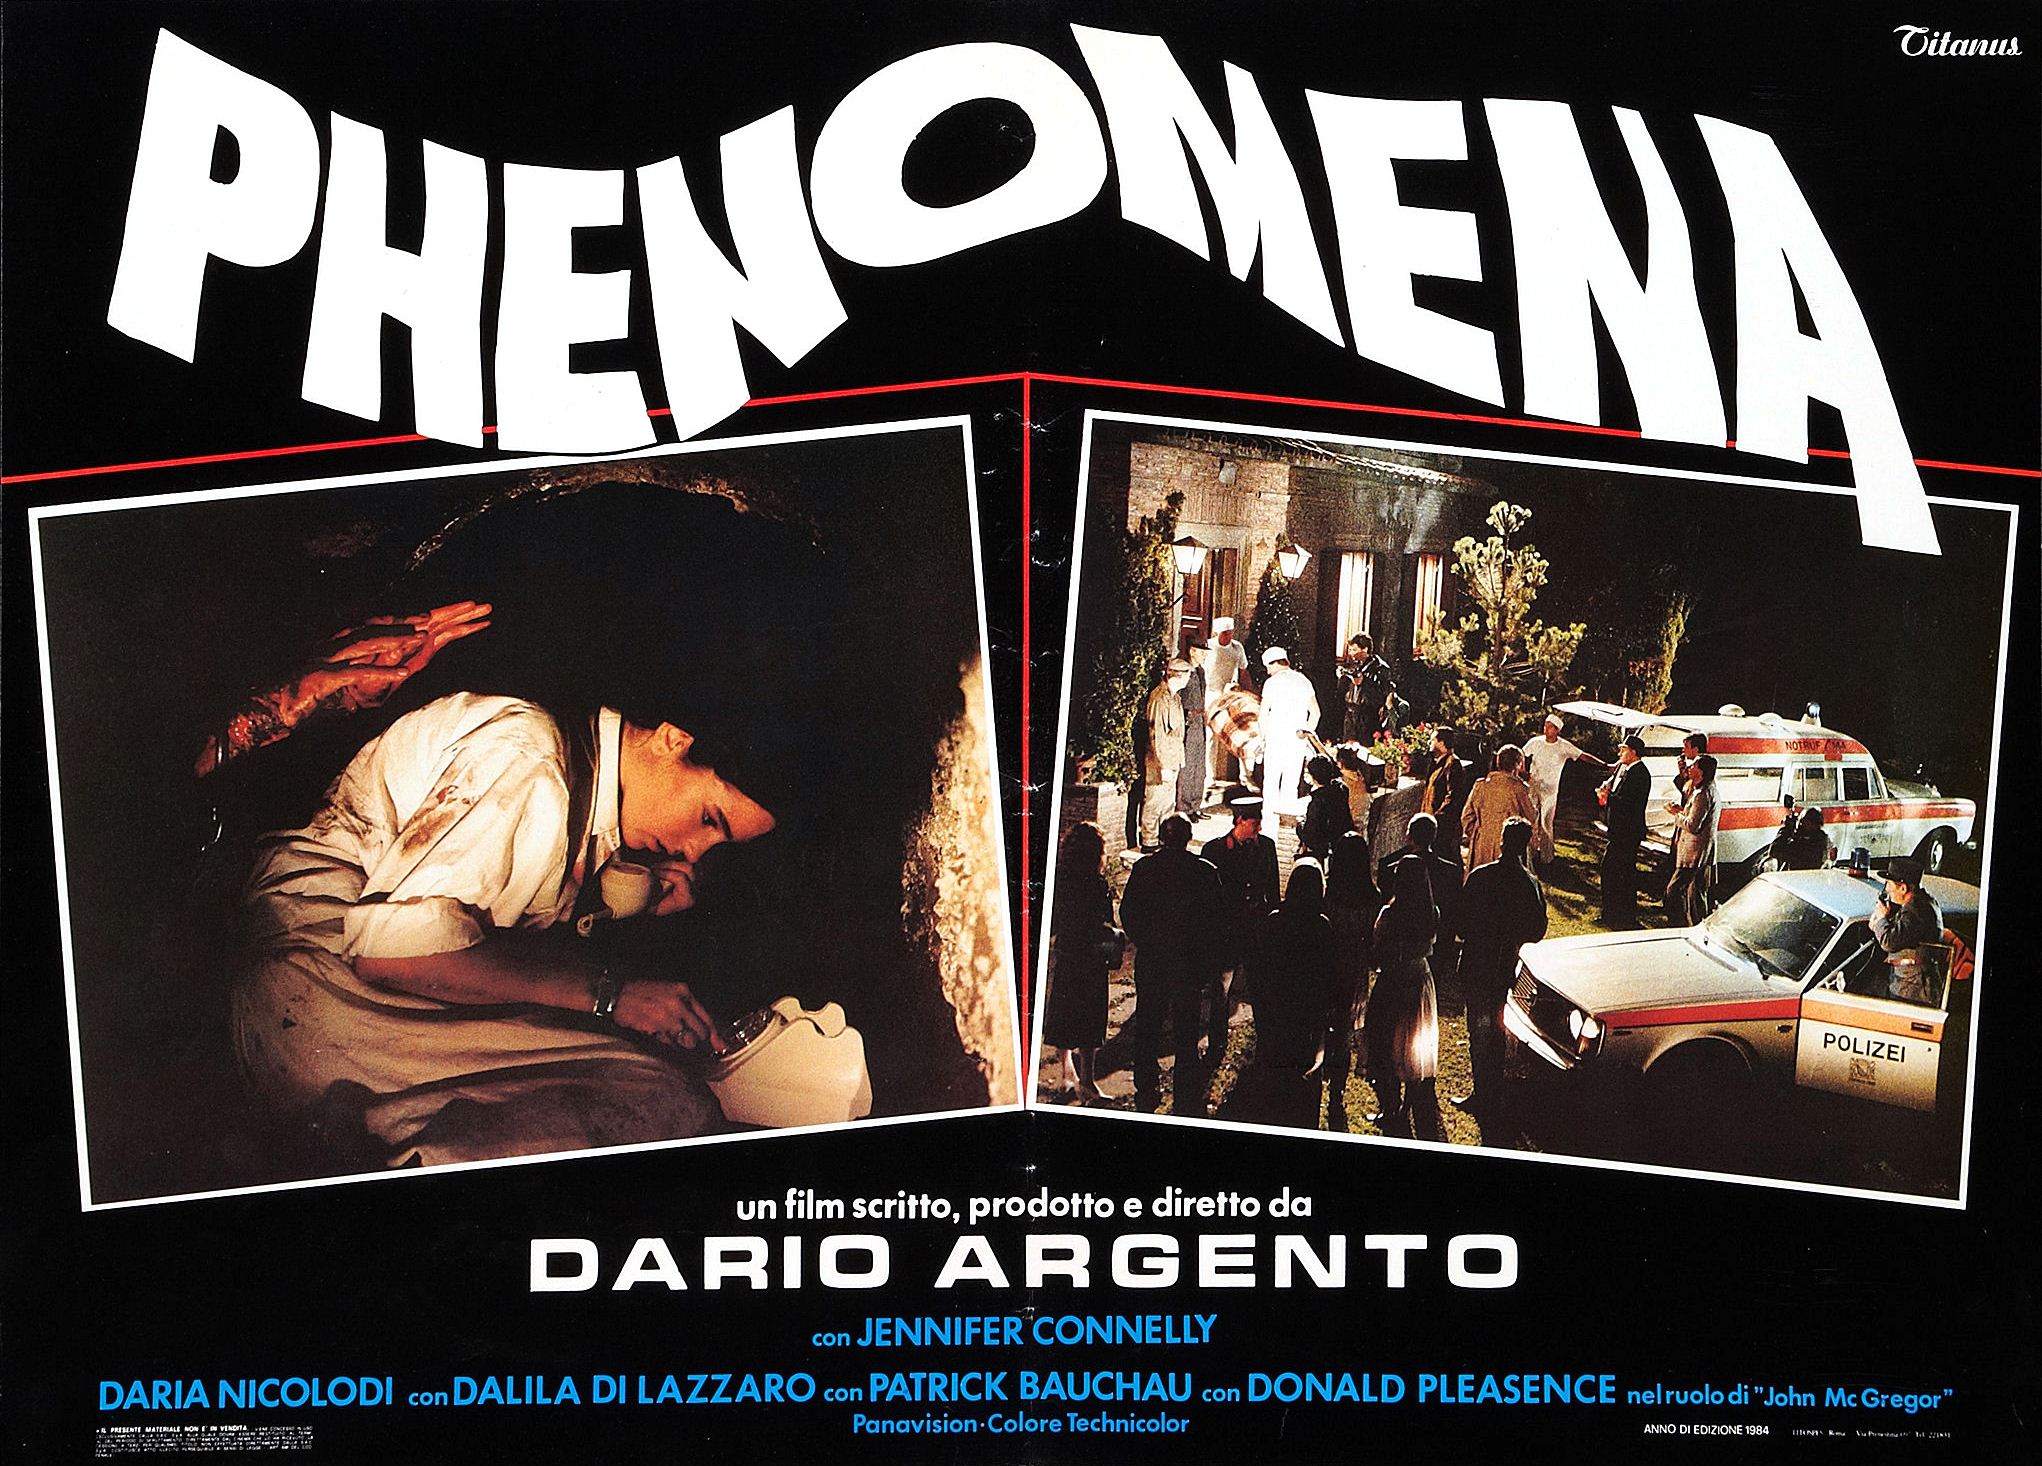 Dario Argento'nun Phenomena Galerisi 1 – phenomena fb 08